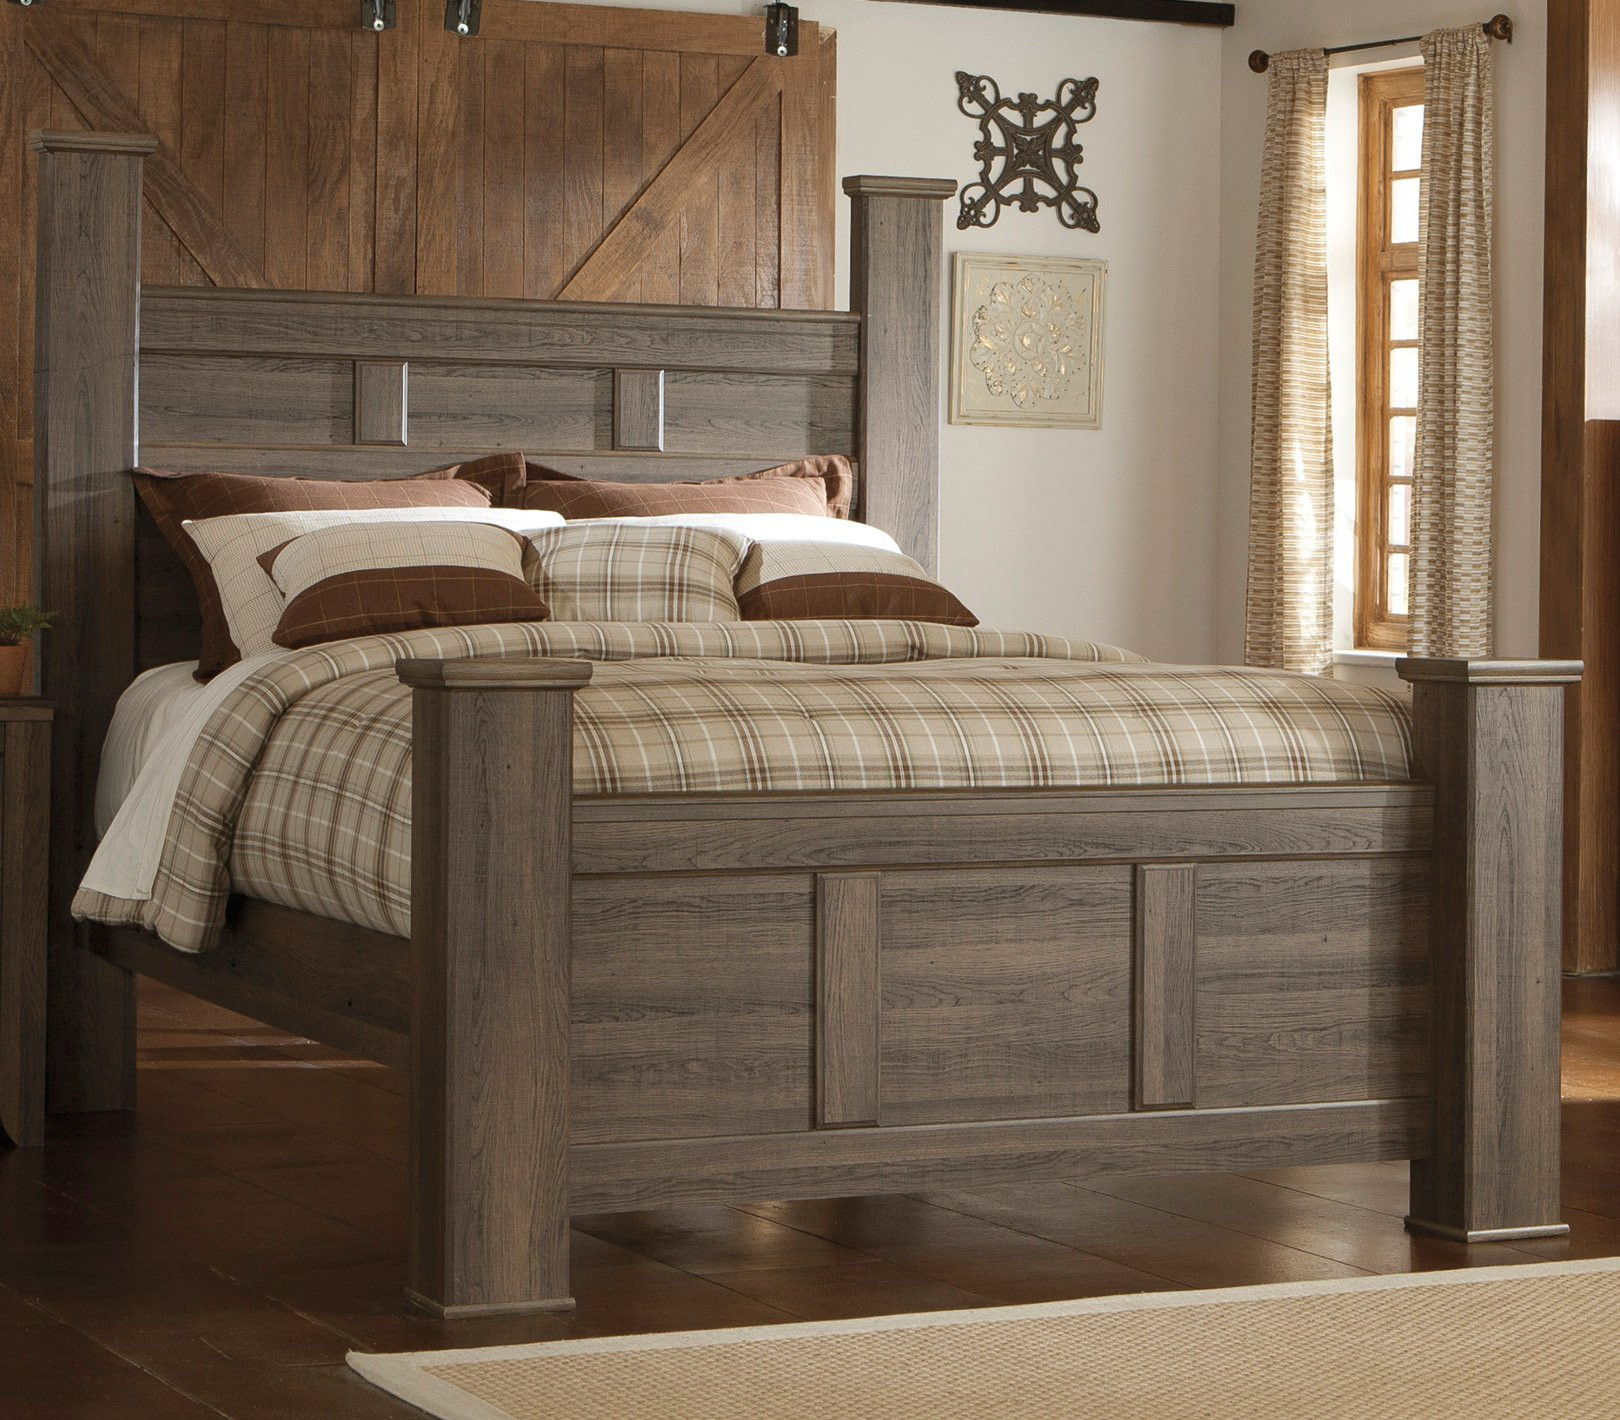 Rustic King Bedroom Sets
 Driftwood Rustic Modern 6 Piece King Bedroom Set Fairfax